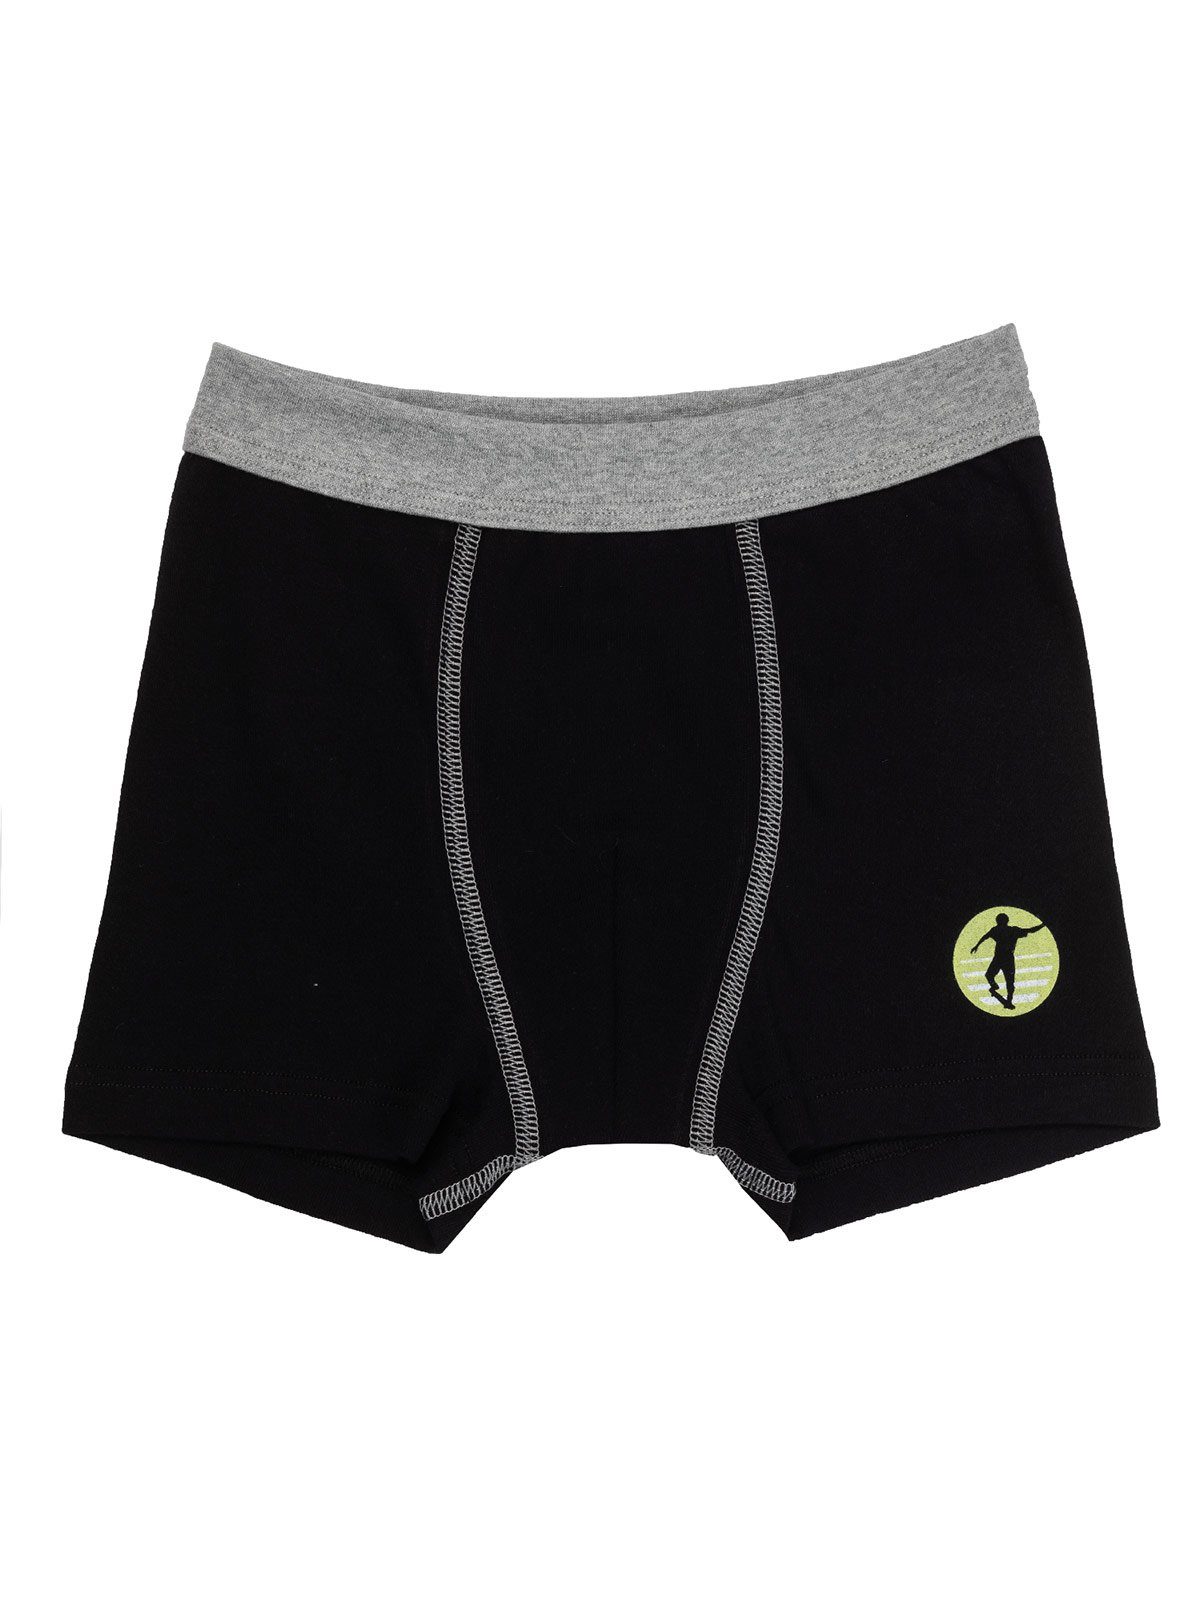 Pack Feinripp grau-weiss for 3er Markenqualität Kids (Packung, Knaben 3-St) hohe Shorts Boxershorts Sweety